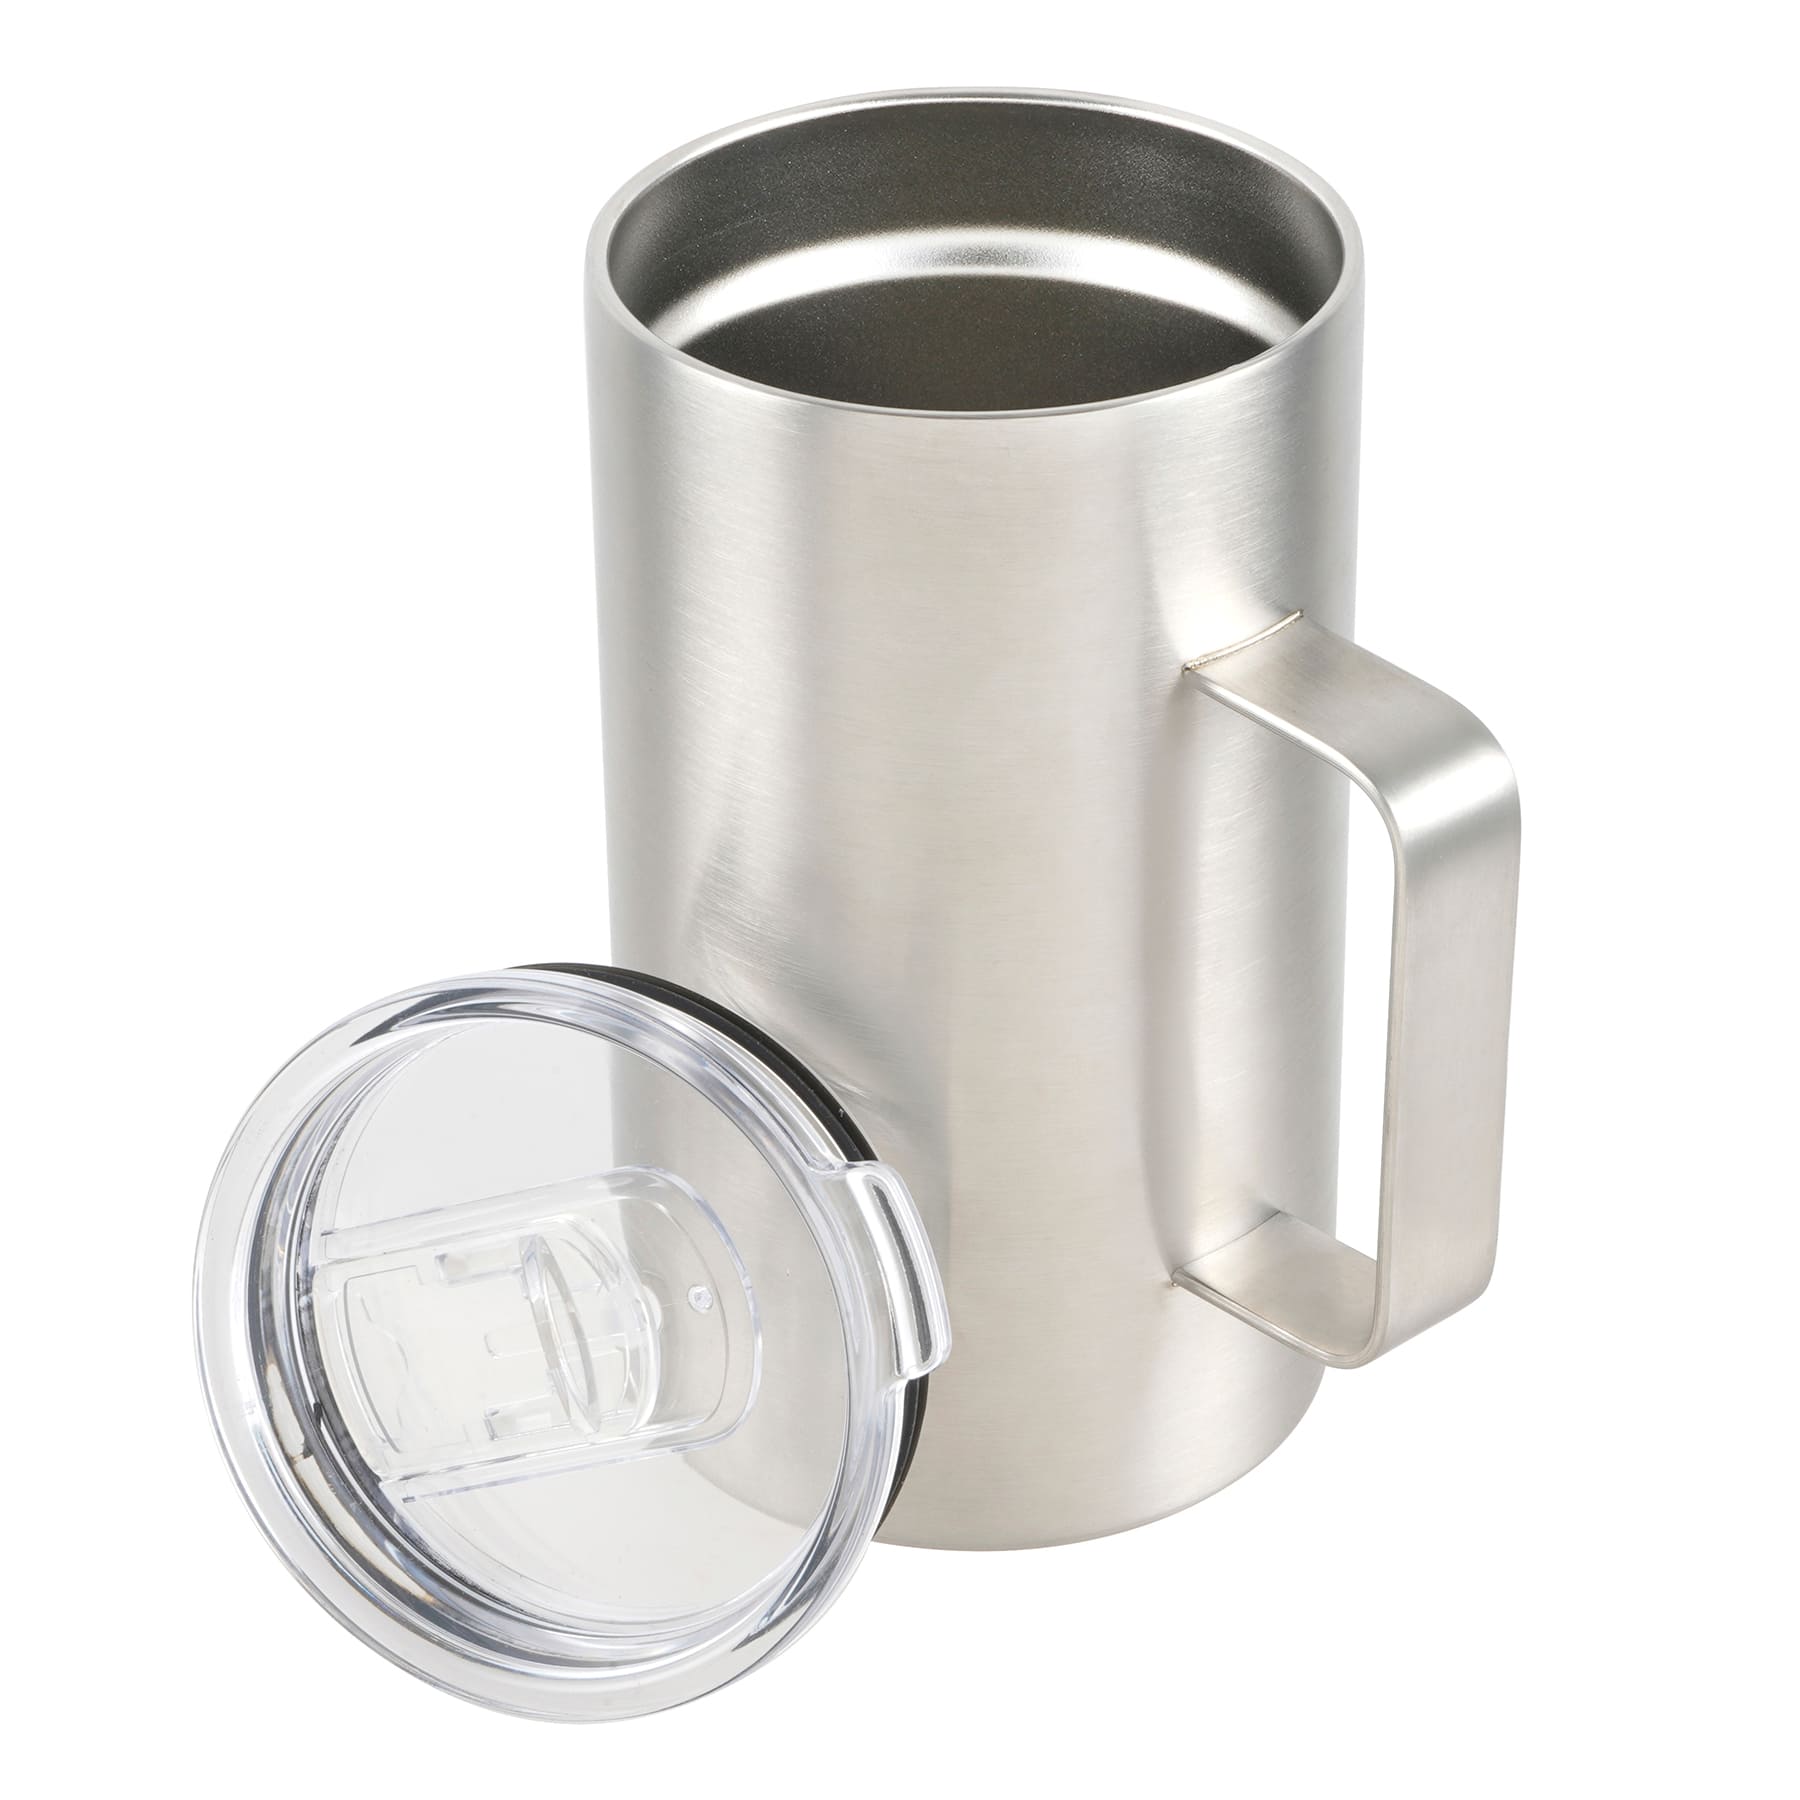 Stainless Steel Travel Tumbler Coffee Tea Mug with Push Lid 14oz BPA Free 